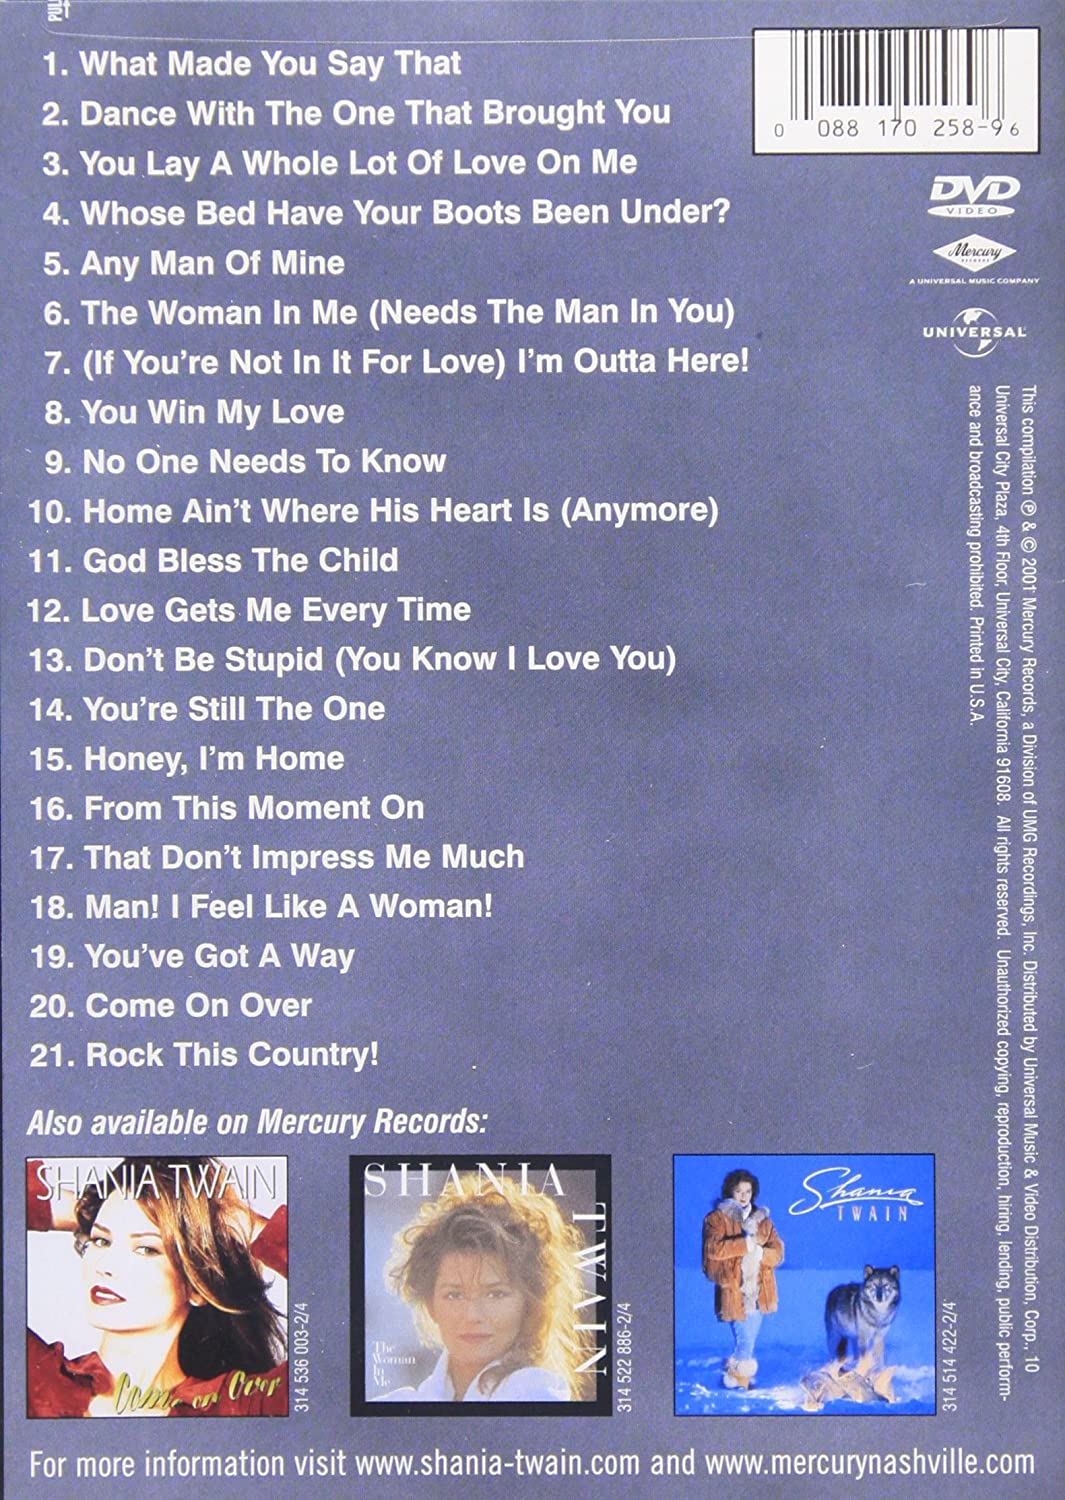 Shania Twain -- The Platinum Collection [2001] [DVD]